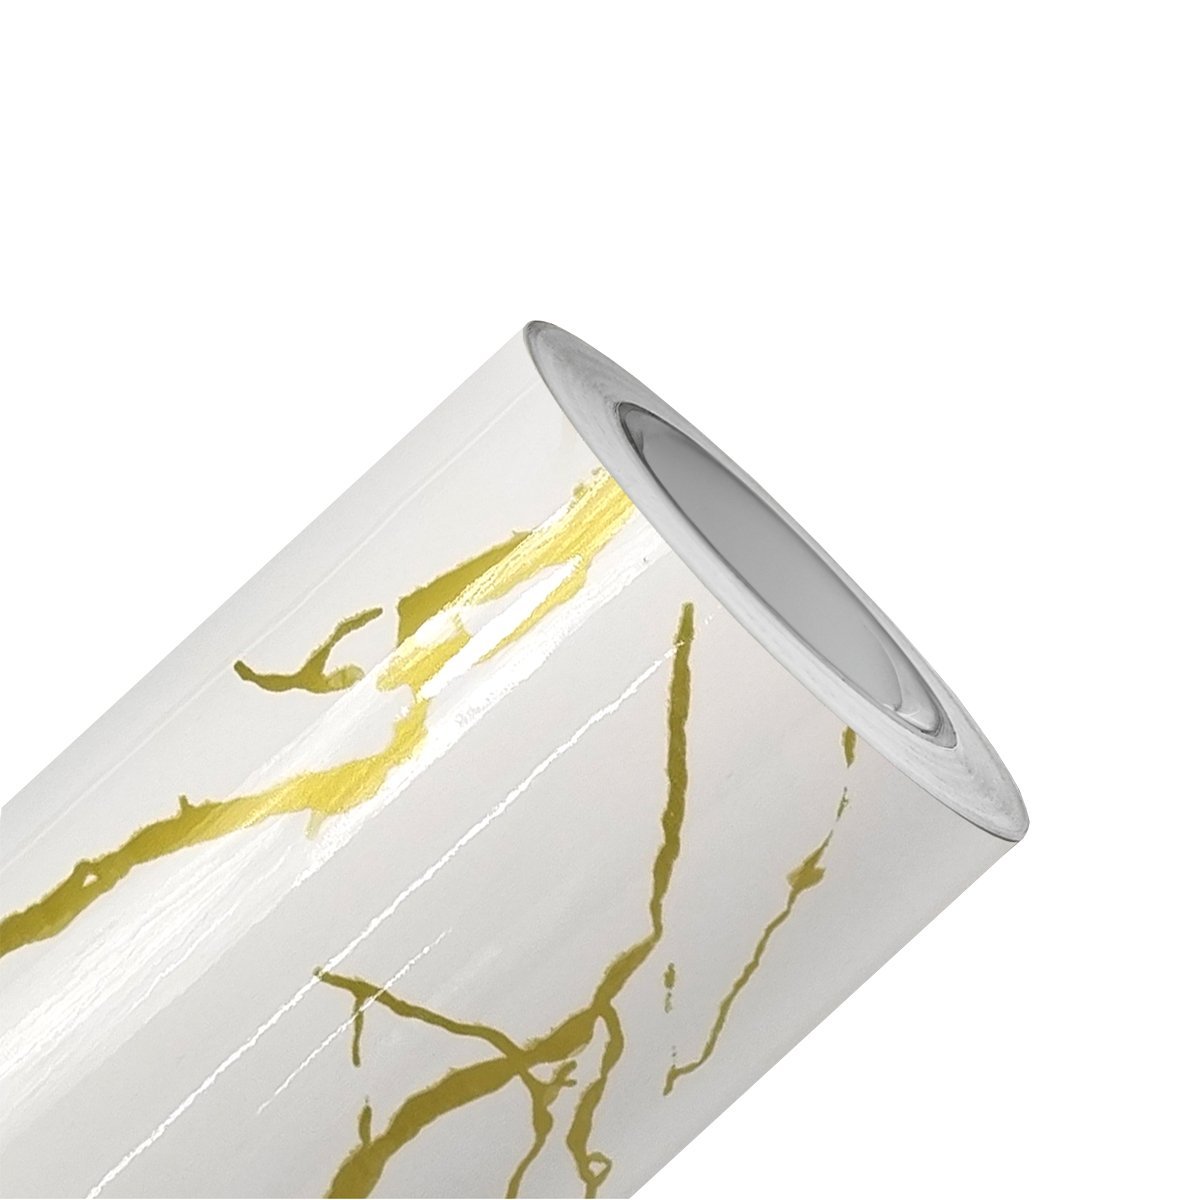 Papel de Parede Mármore Alba Imperial Branco Dourado Vinil Adesivo Impermeável Pia Box Mesa Banheiro